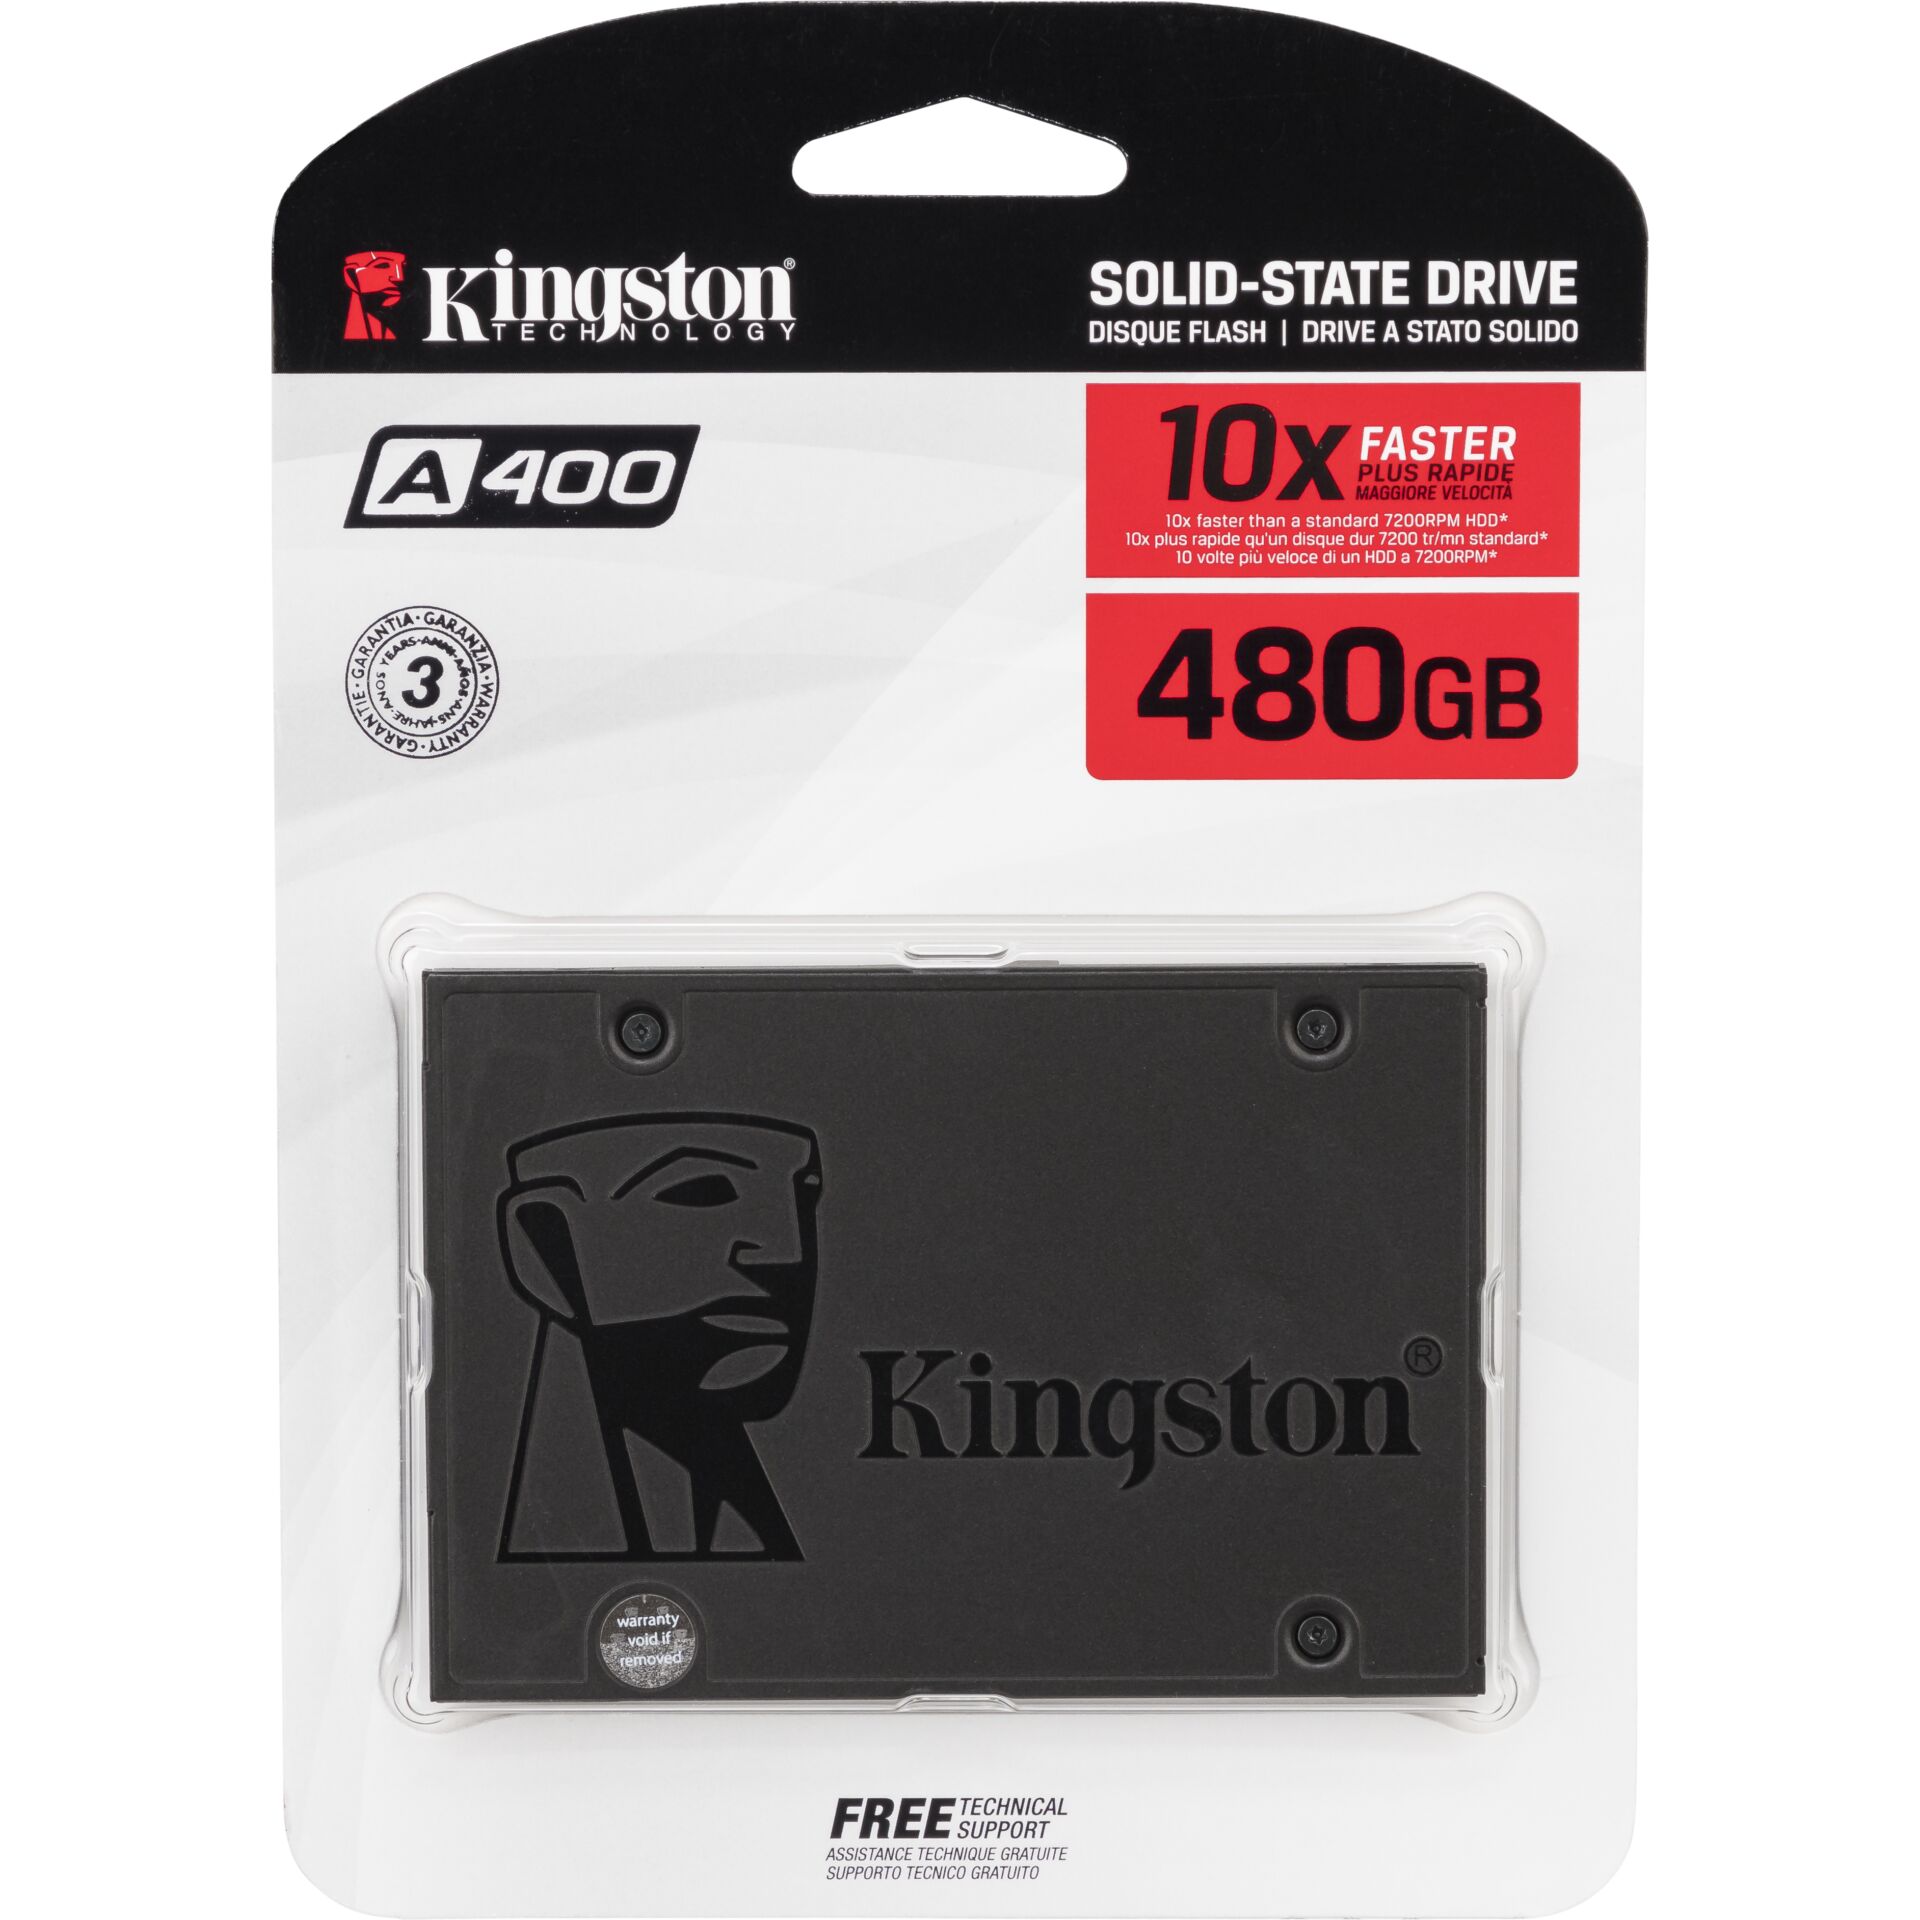 Kingston SSD A400 480GB 2.5' SATA-600